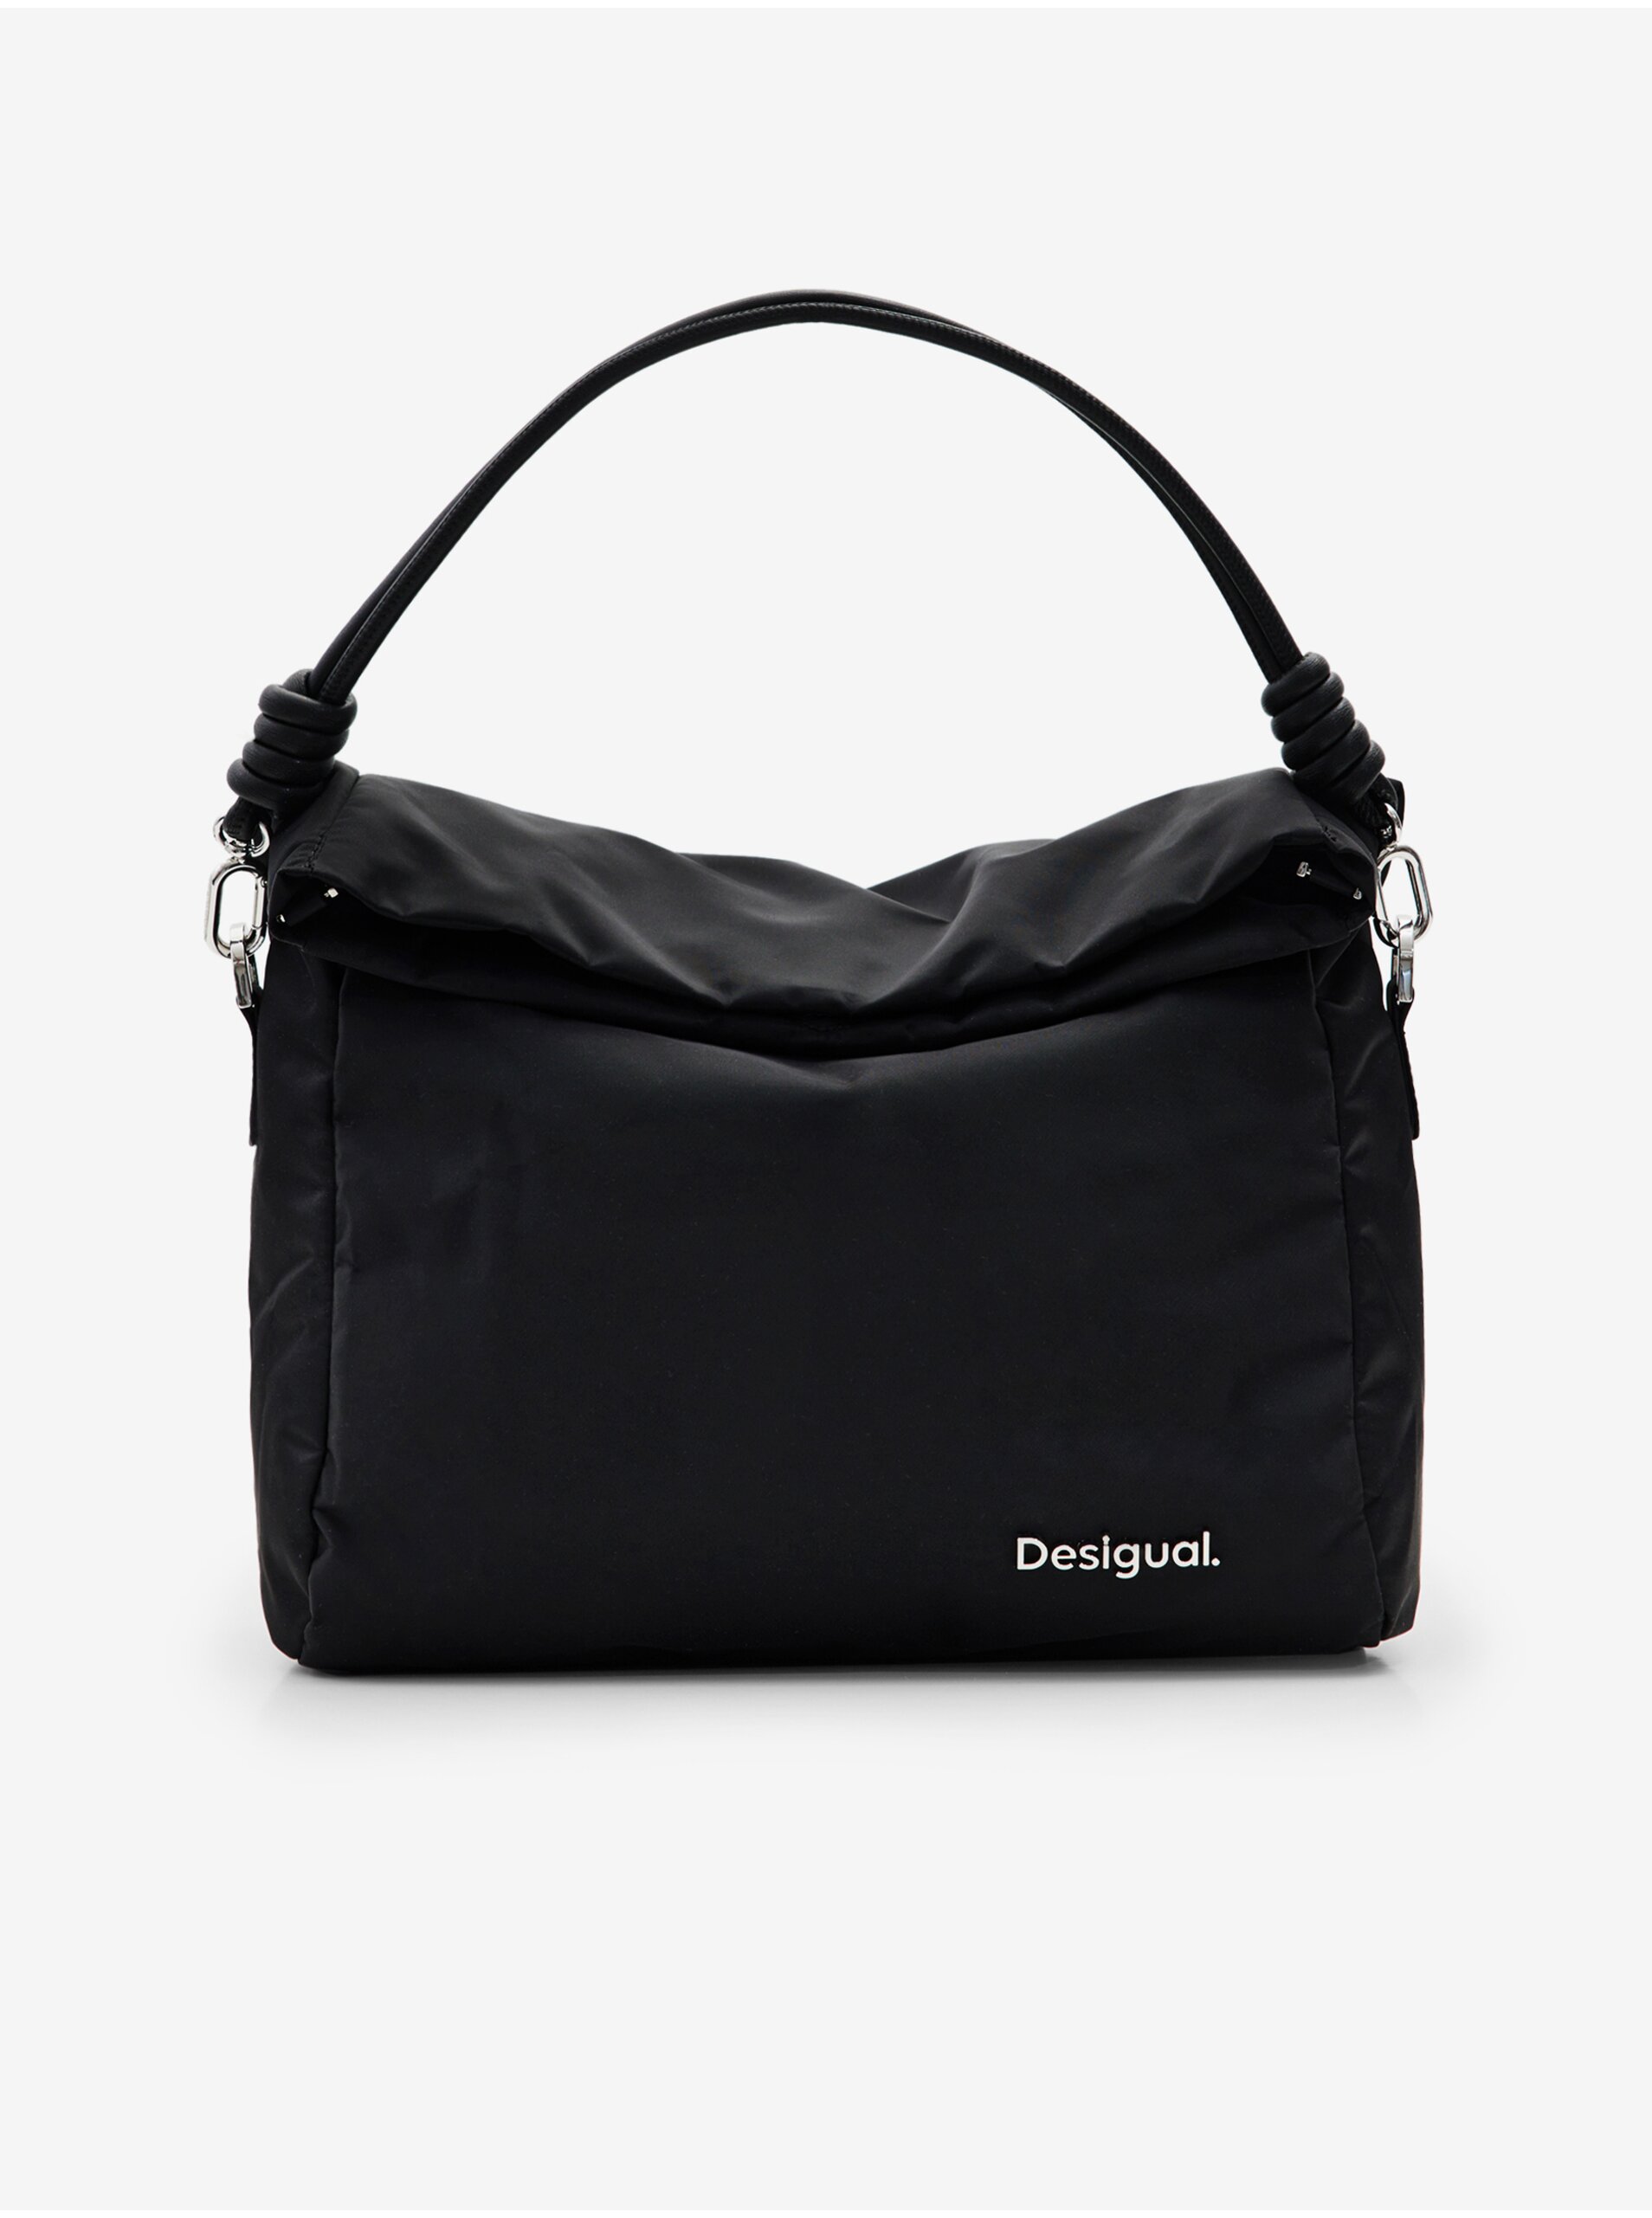 Women's Black Handbag Desigual Priori Loverty 3.0 - Women